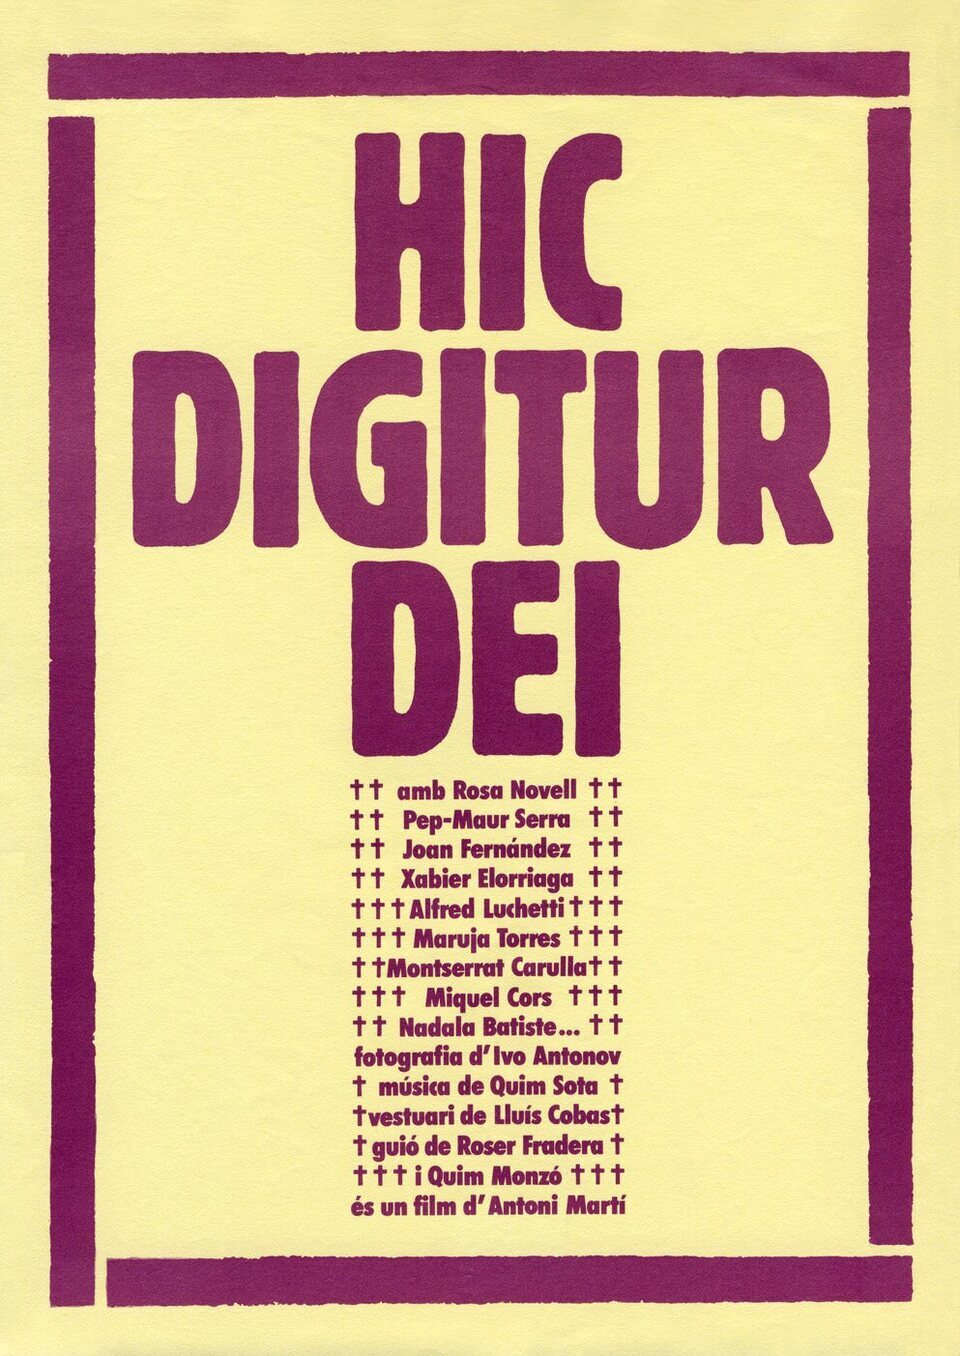 Cartel de Hic Digitur Dei - España